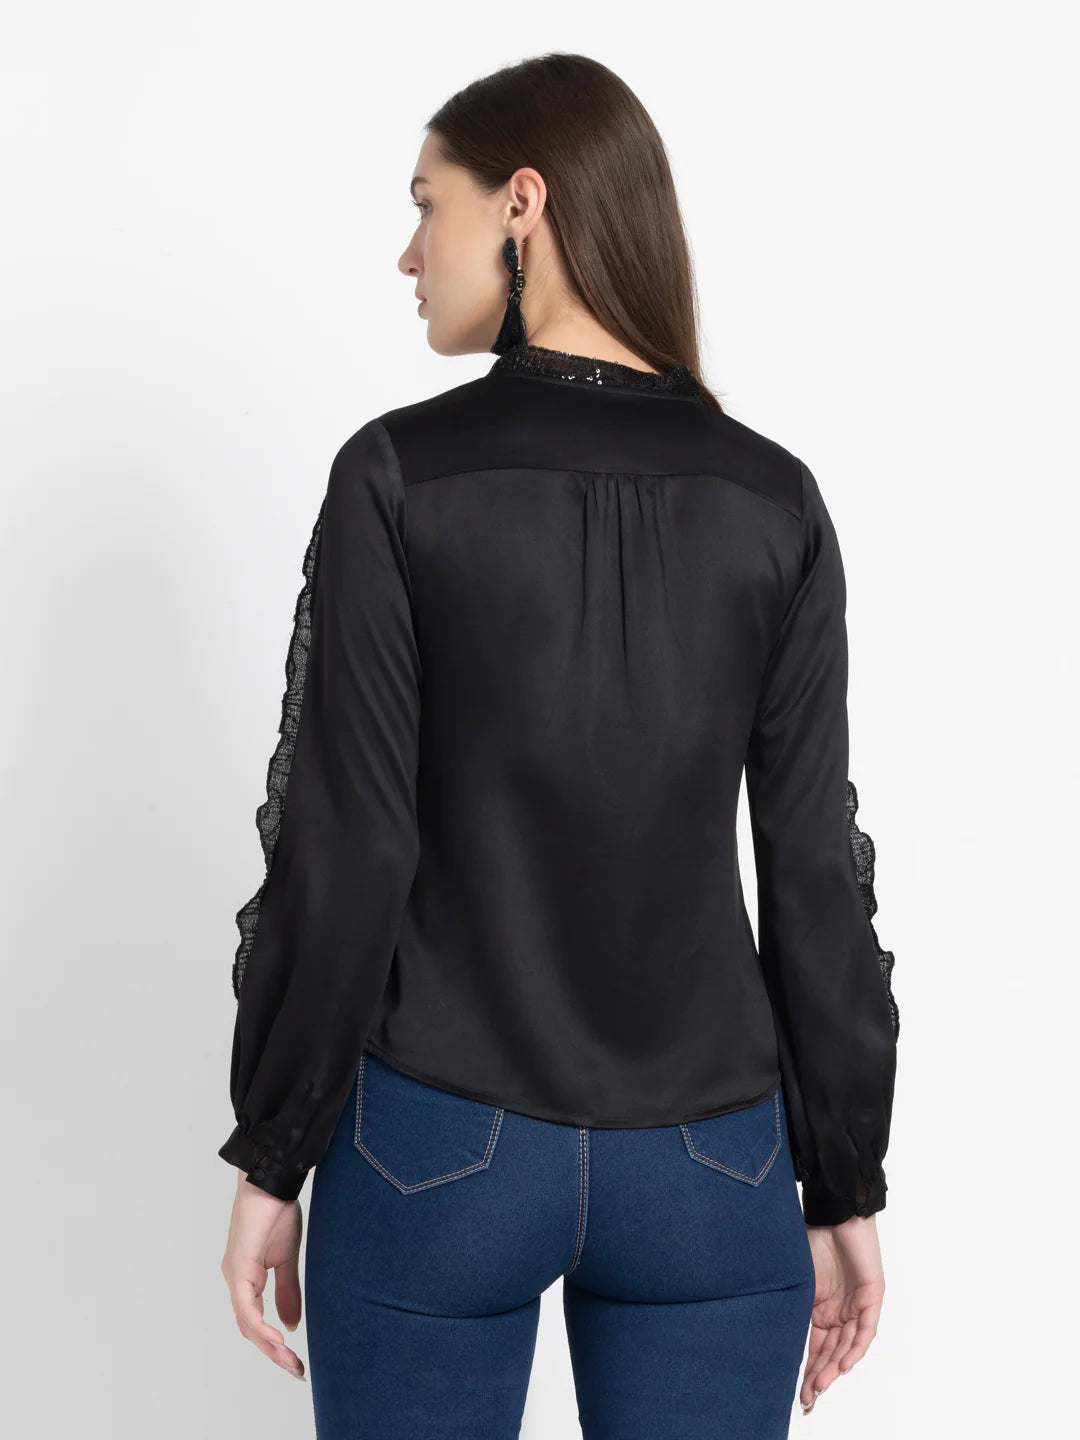 Black Party Shirt for Women | Elegant Noir Black Frill Sleeves Party Shirt